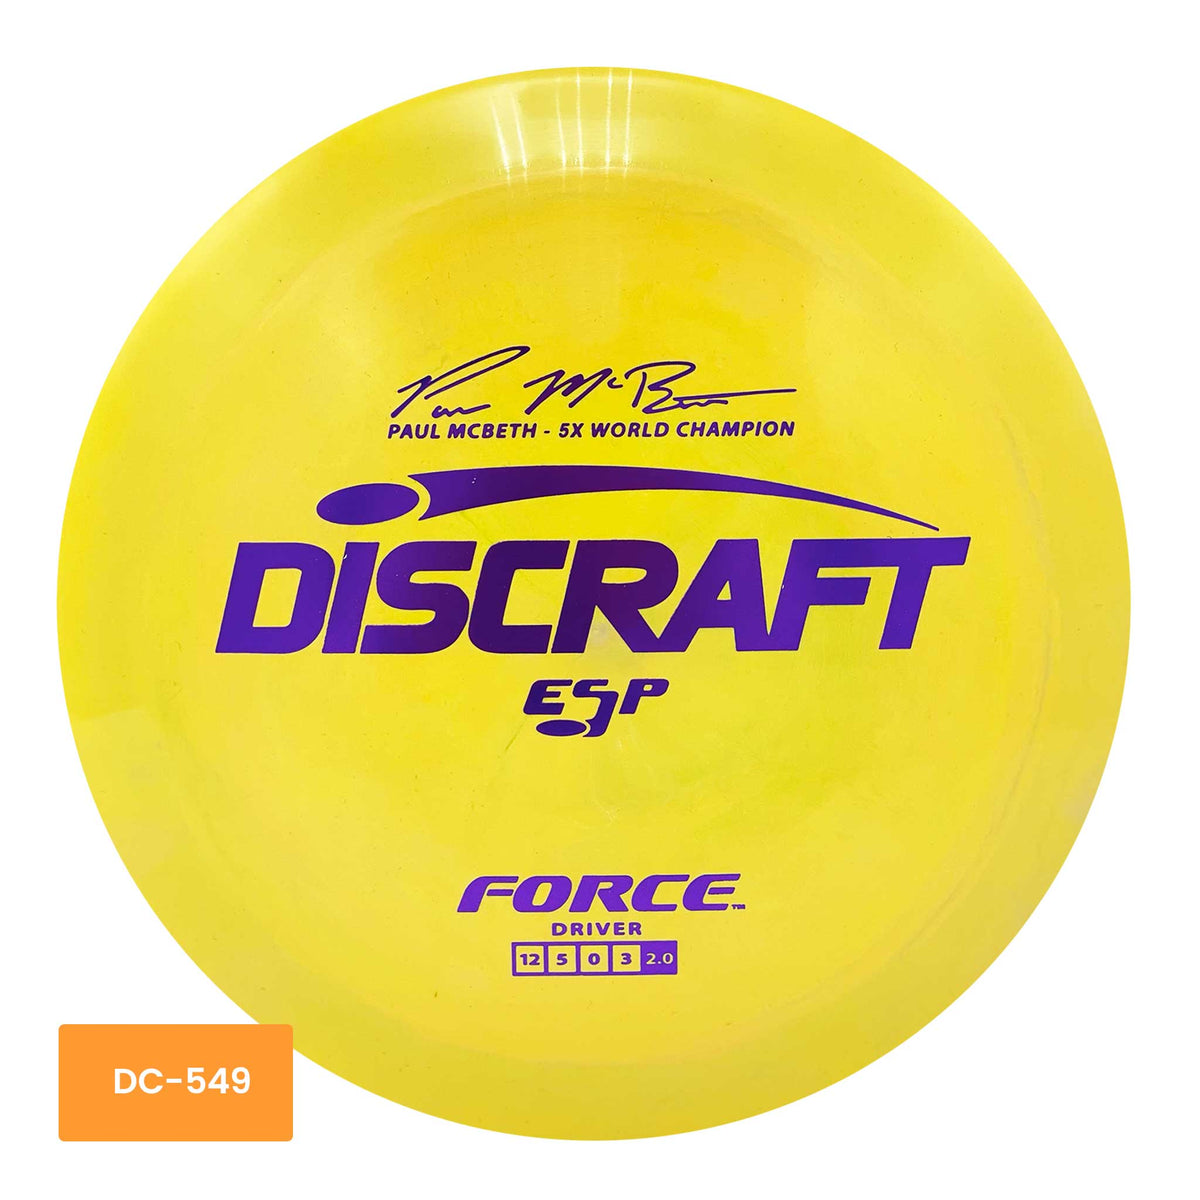 Discraft Paul McBeth Signature ESP Force distance driver - Yellow